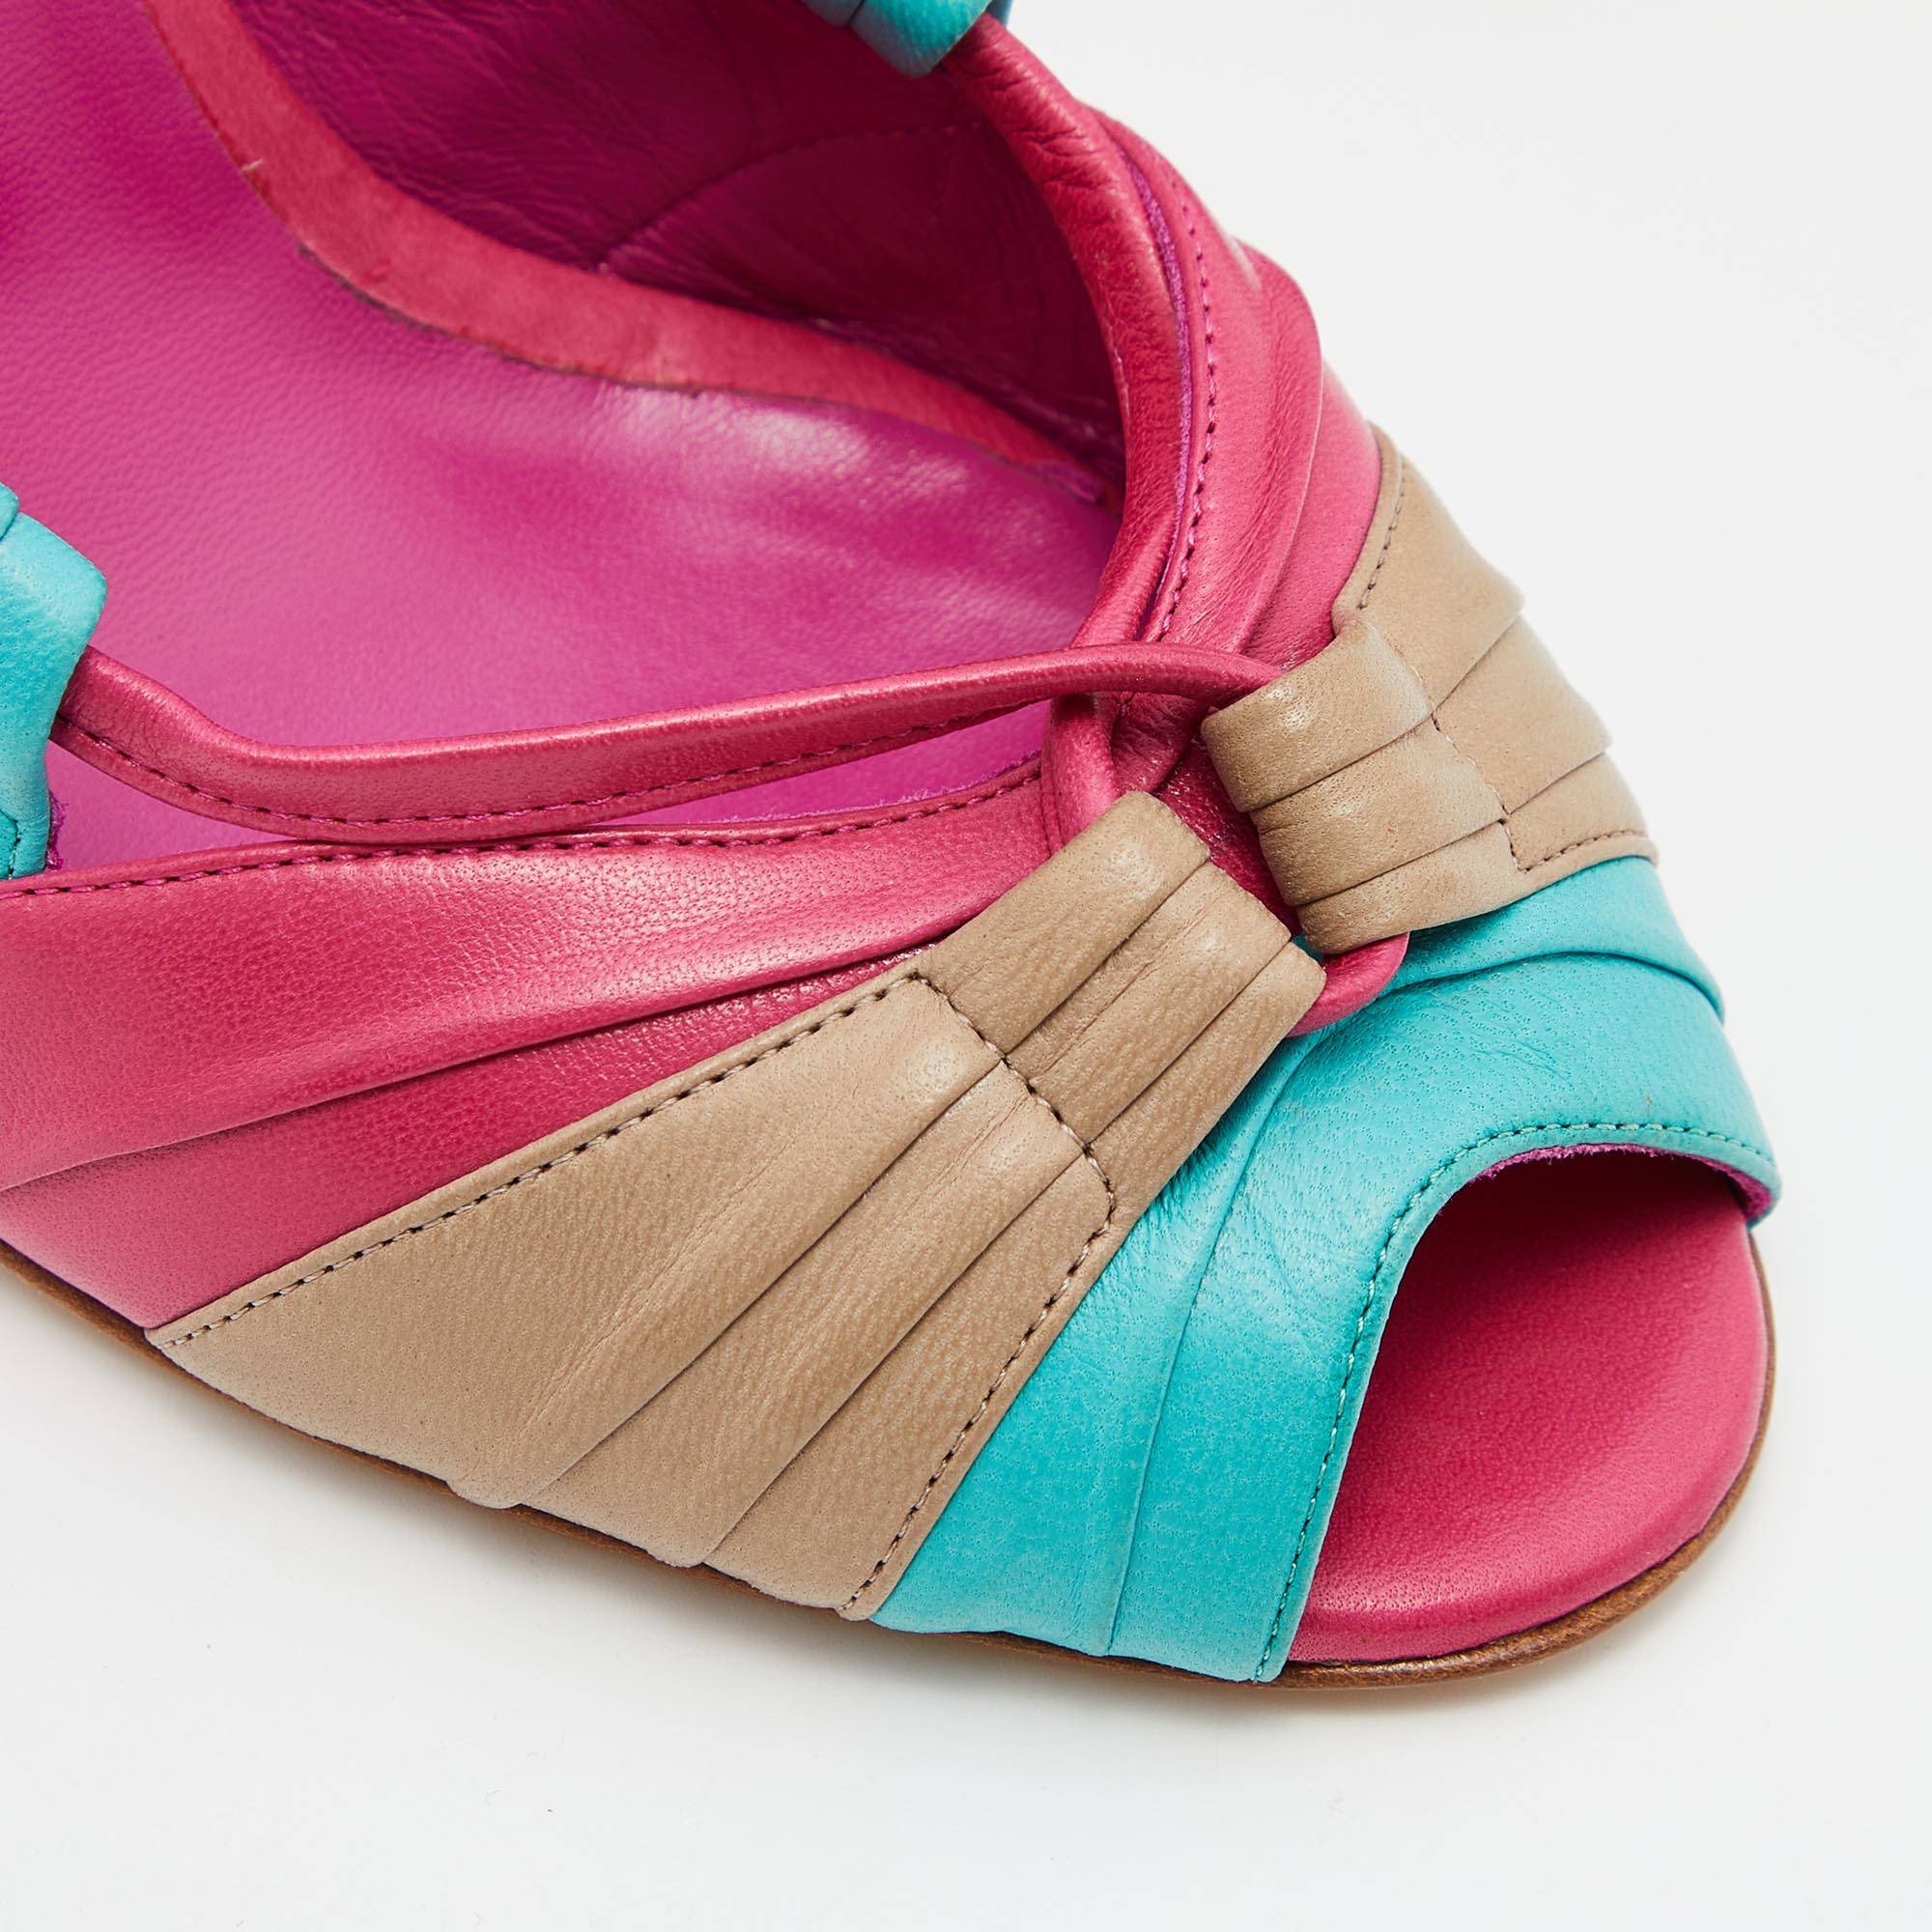 Manolo Blahnik Tri Color Leather Natuk Peep Toe Sandals Size 38.5